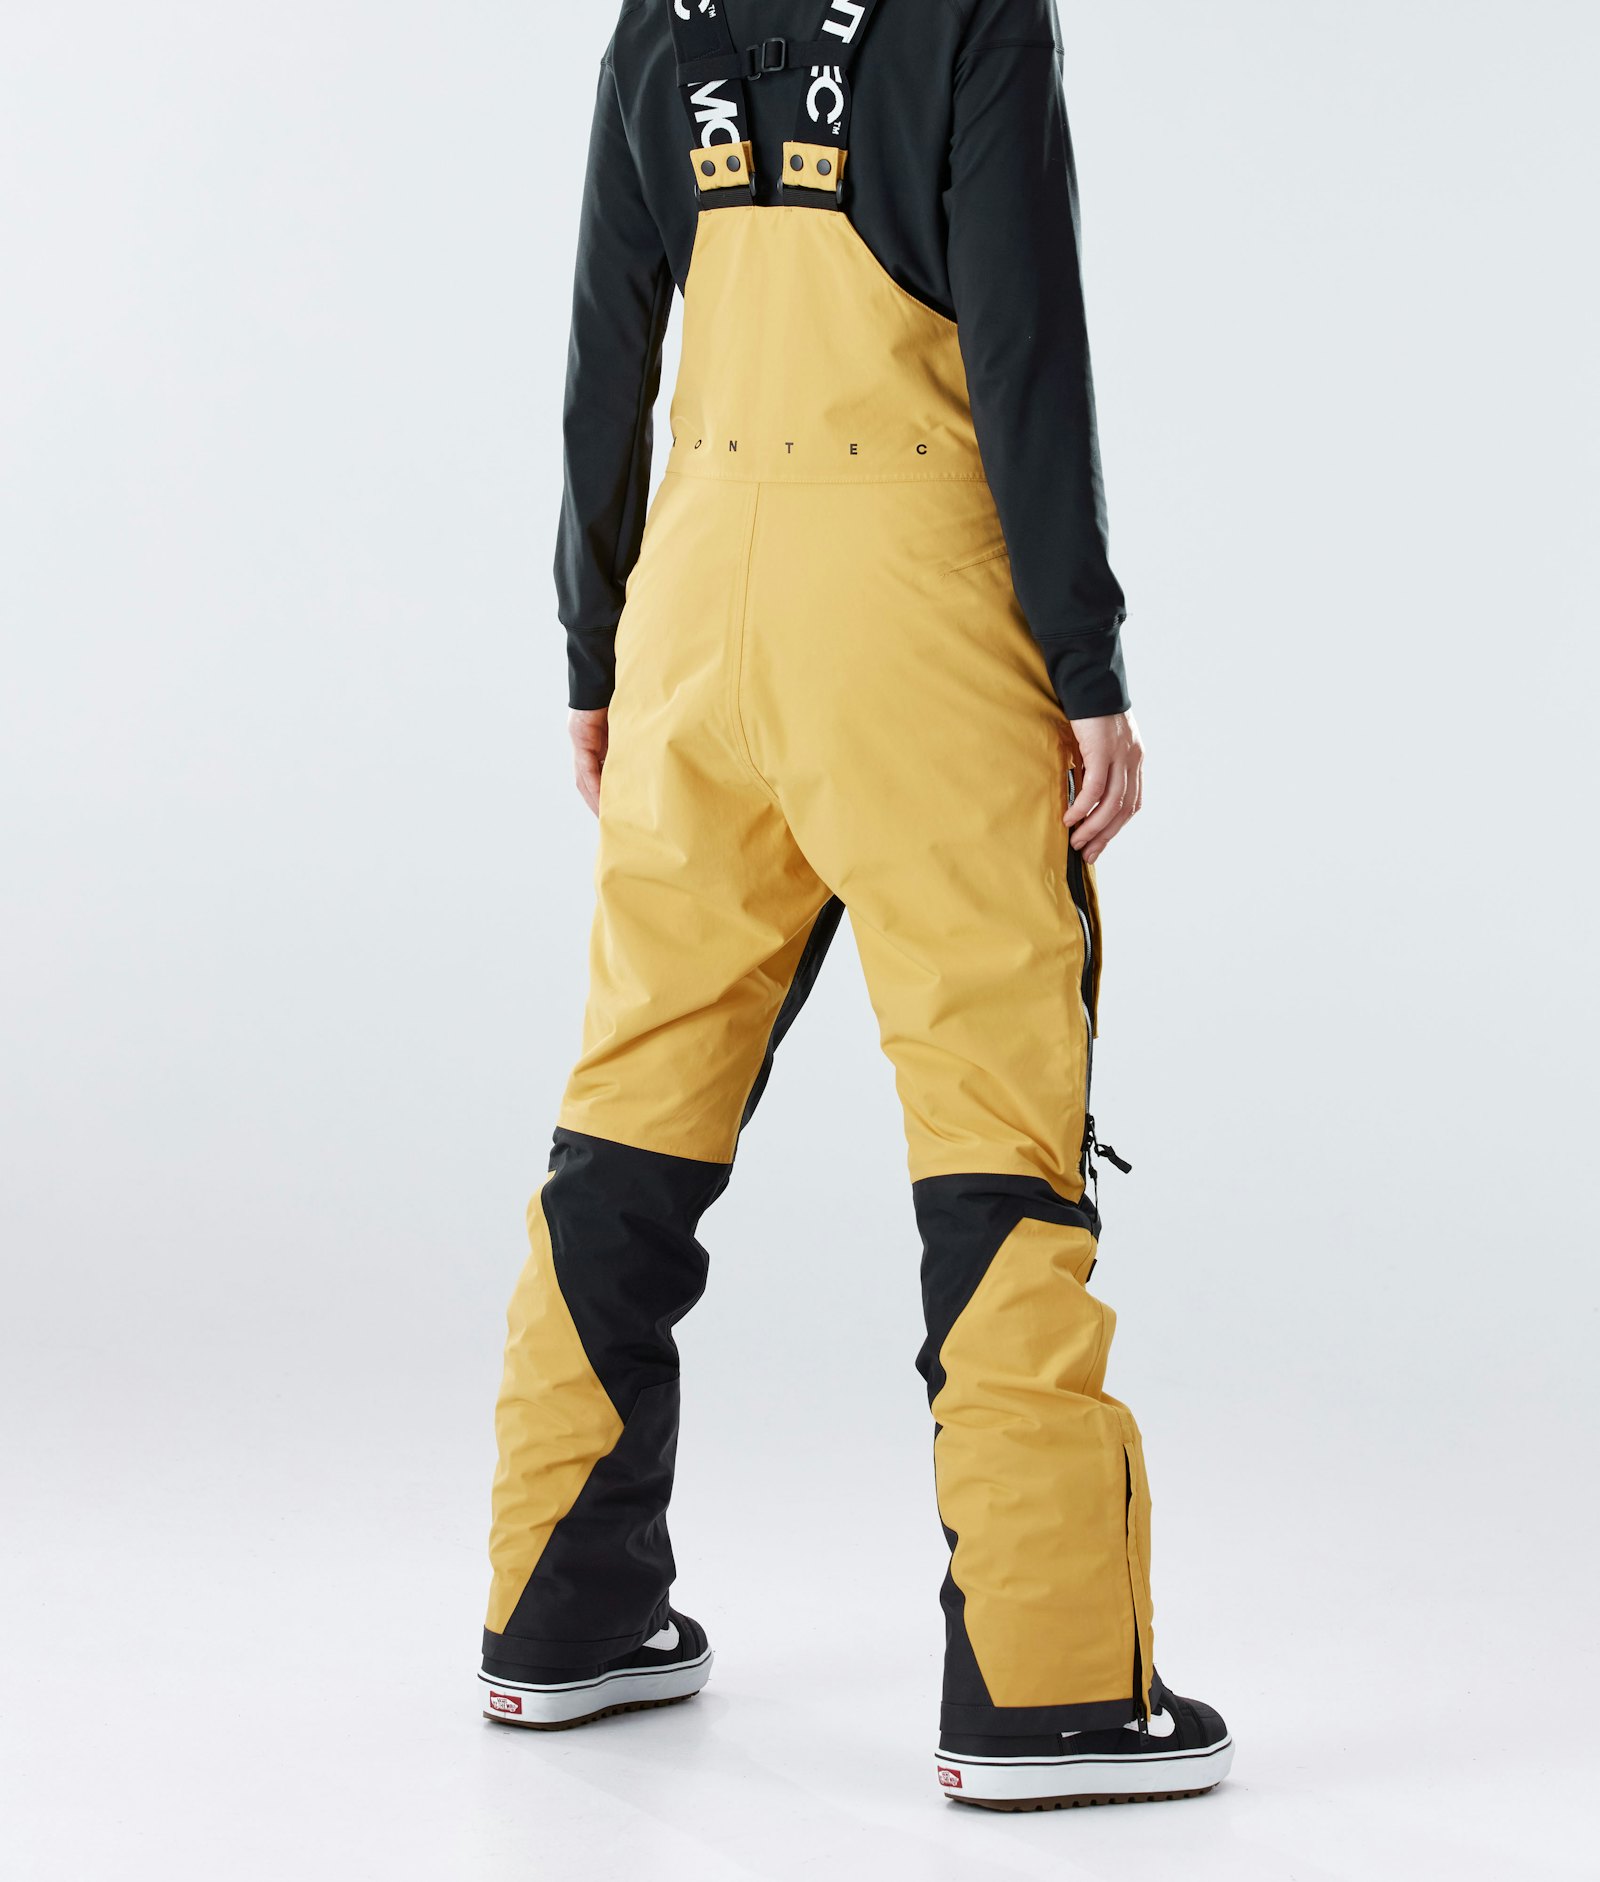 Fawk W 2020 Snowboard Pants Women Yellow/Black